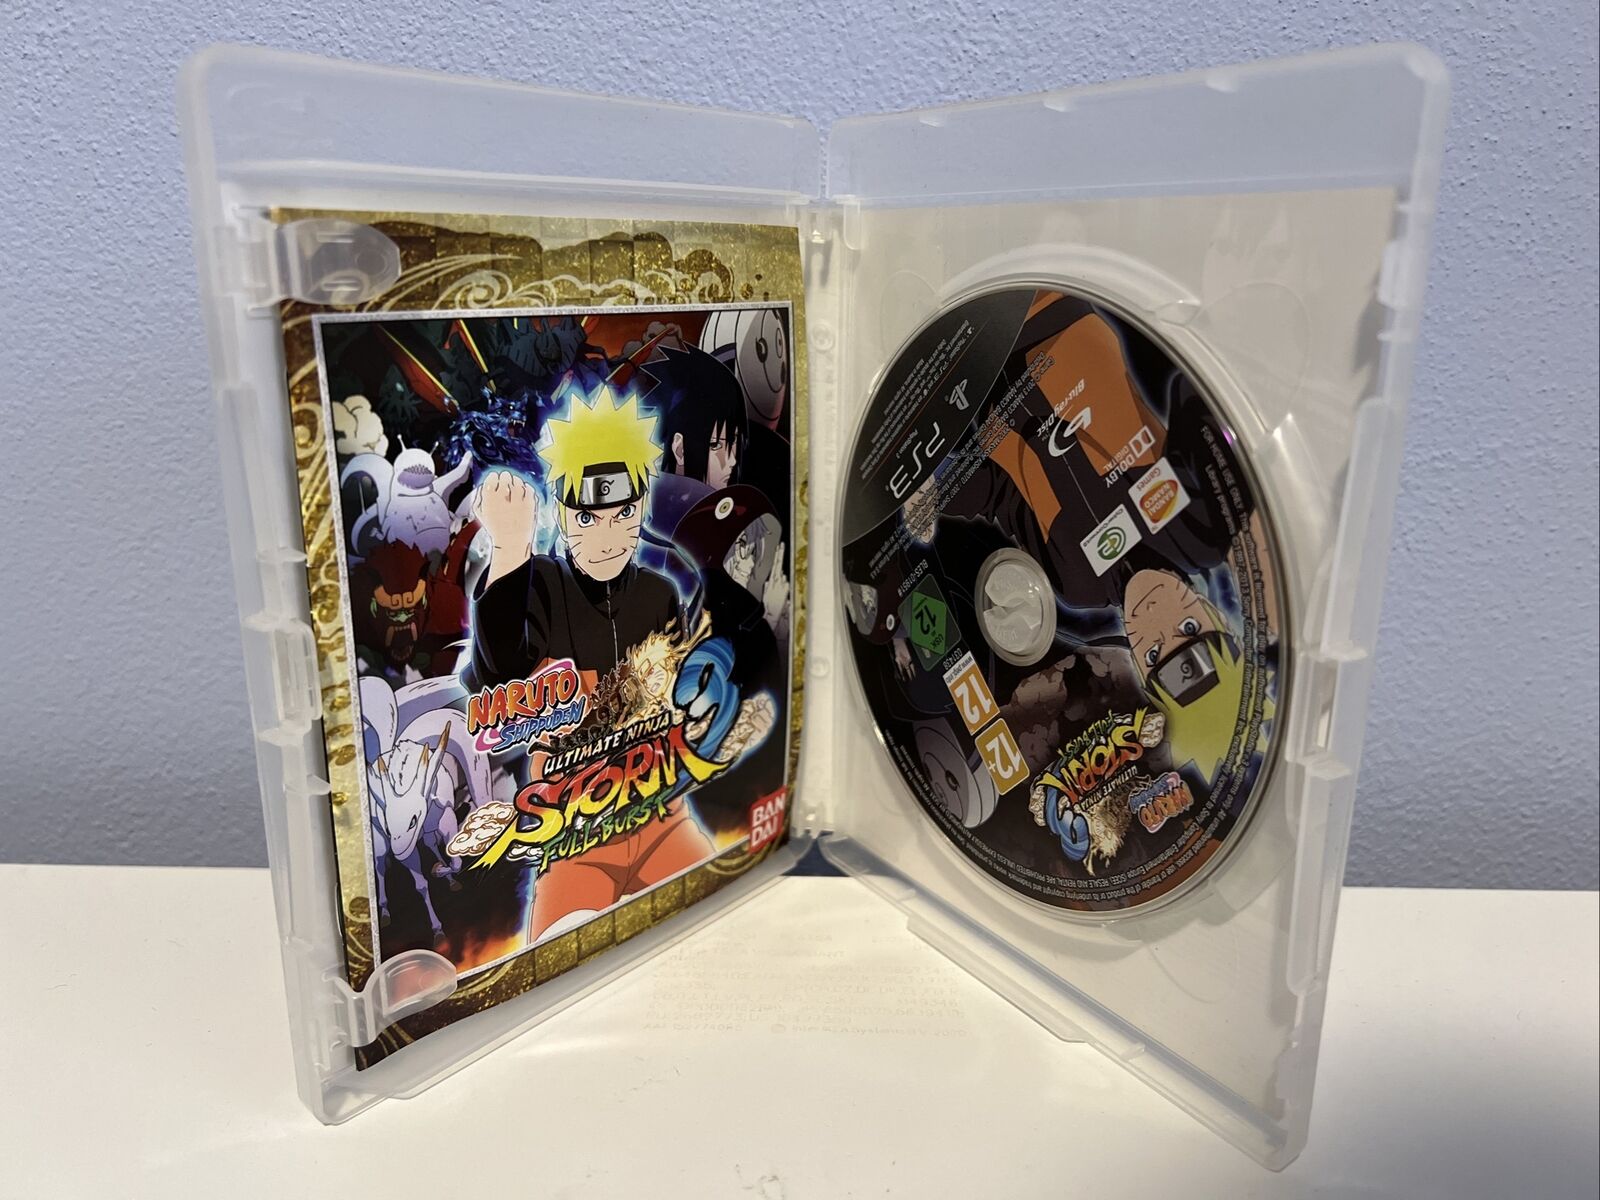 Ps3-videogame-Naruto-Ultimate-Ninja-Storm-3-Fullbust-Pal-Ita-133933536009-4